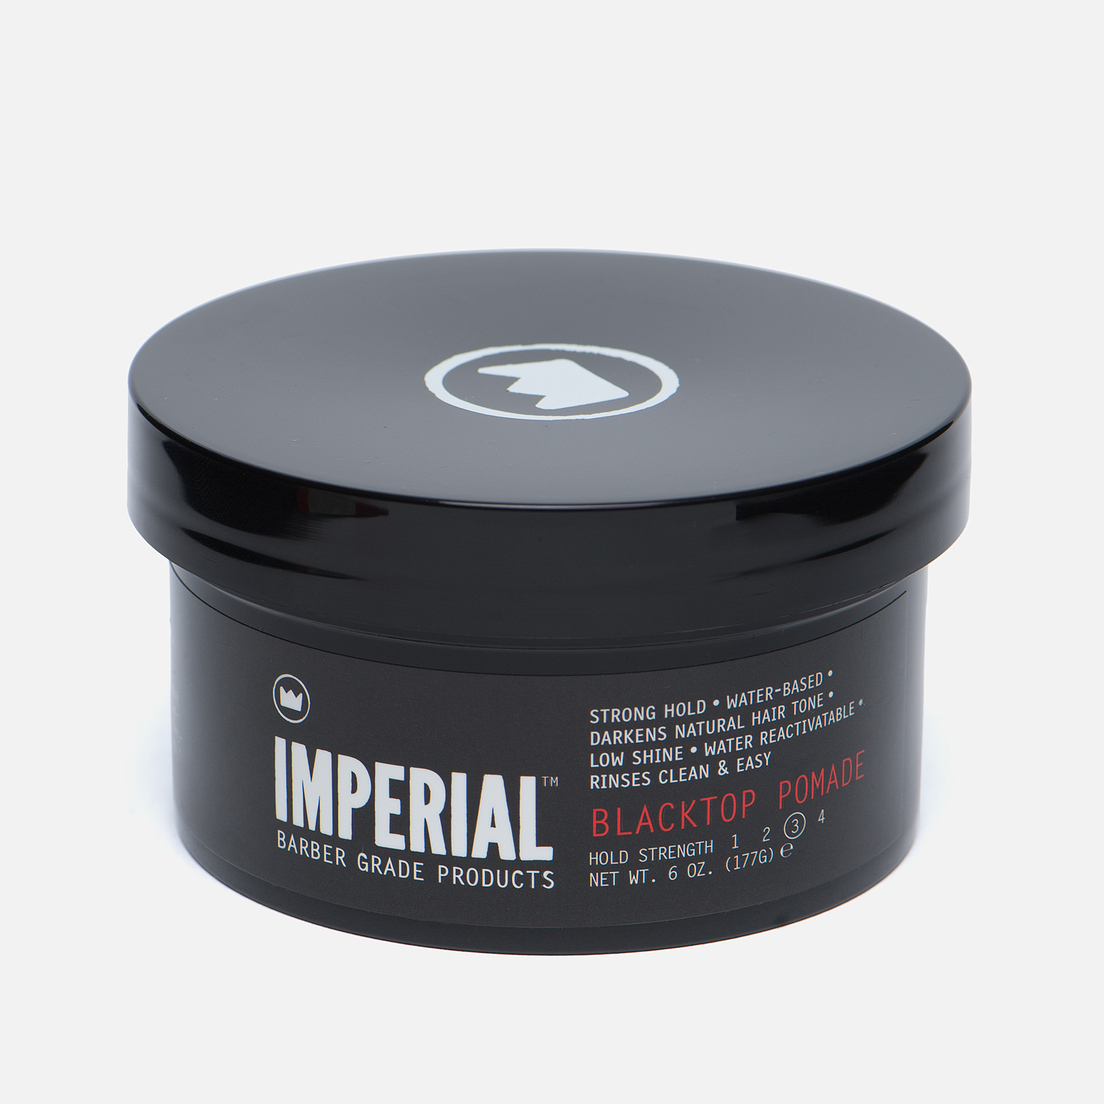 Imperial Barber Паста для укладки волос Blacktop Pomade 177ml